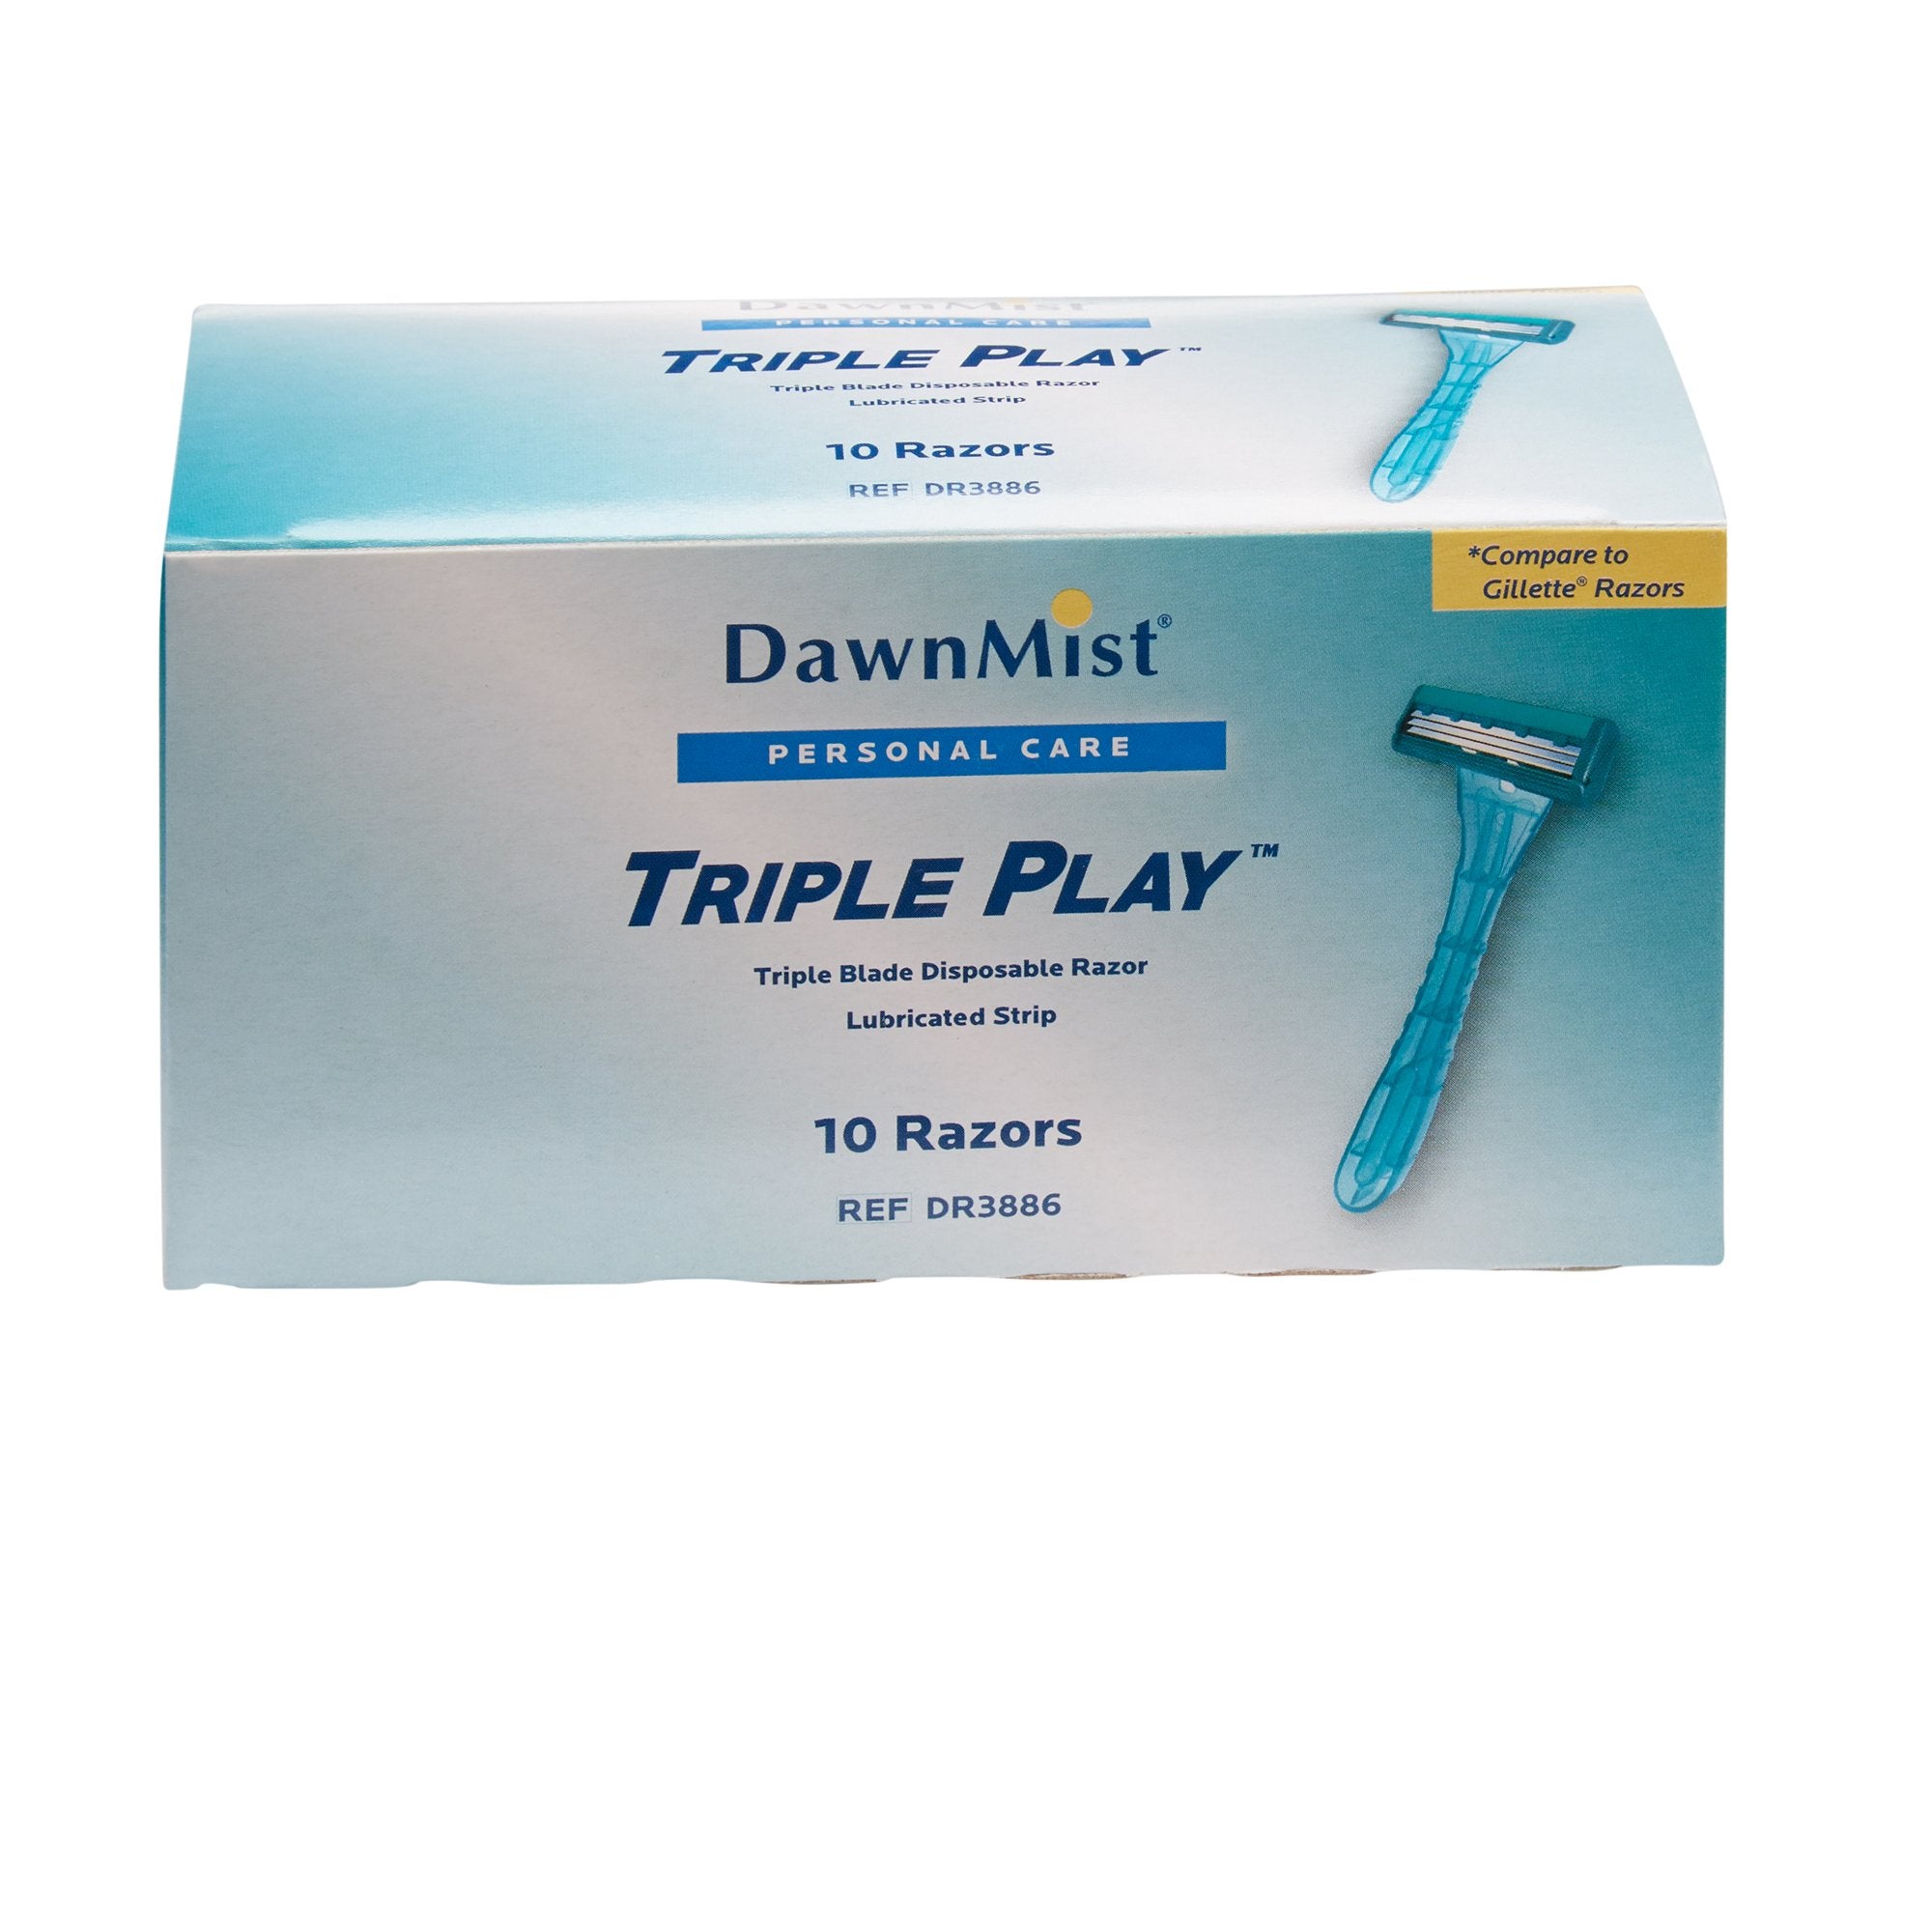 Razor DawnMist Triple Play Triple Blade Disposable